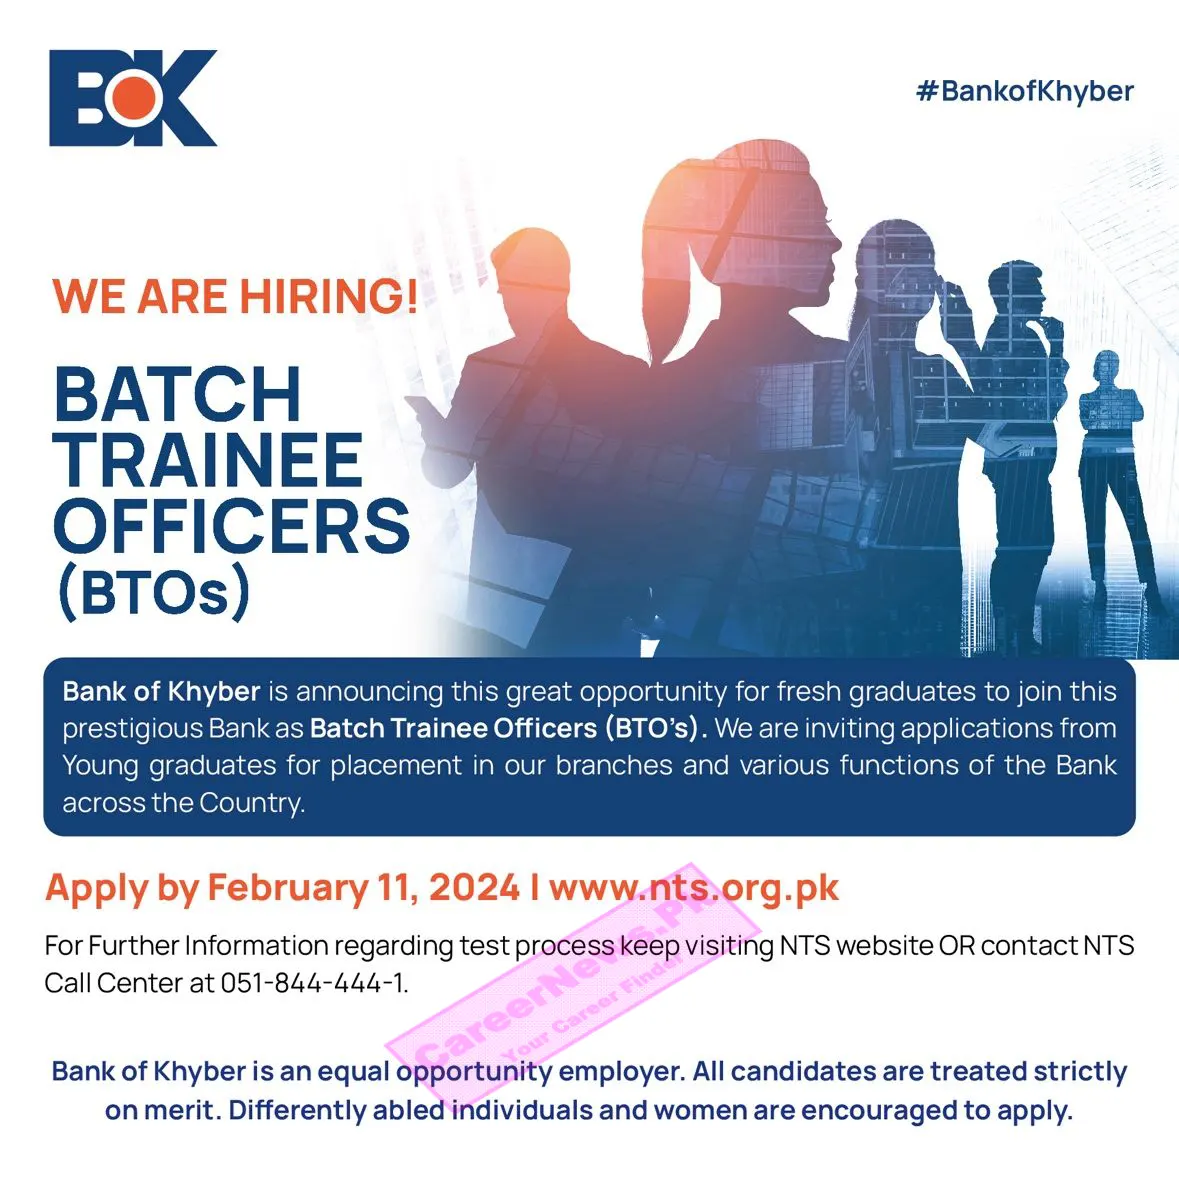 Bank of Khyber Batch Trainee Officers BTO Program 2024